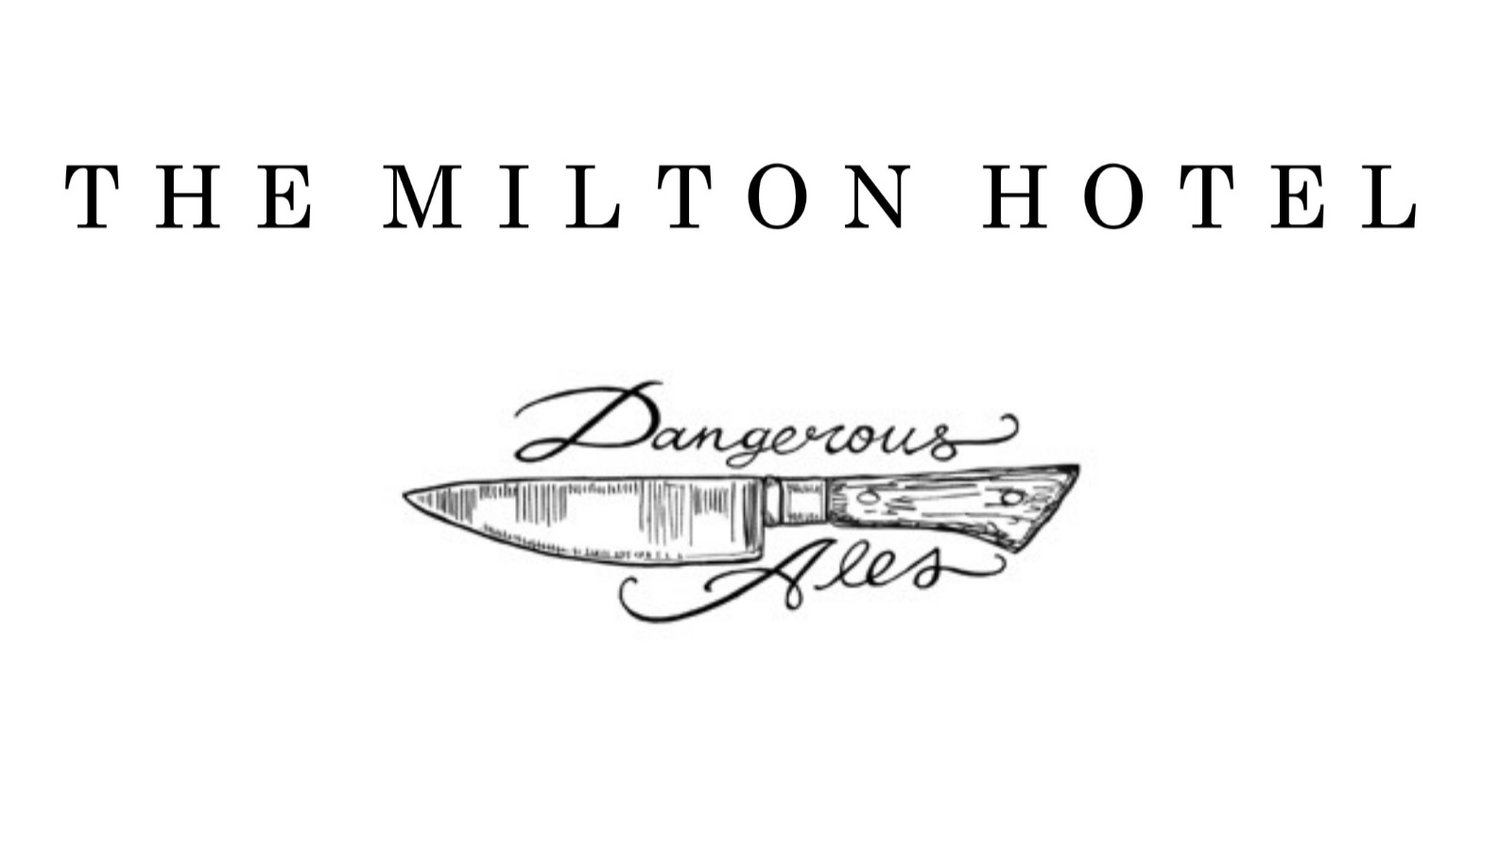 The Milton Hotel - House of Dangerous Ales